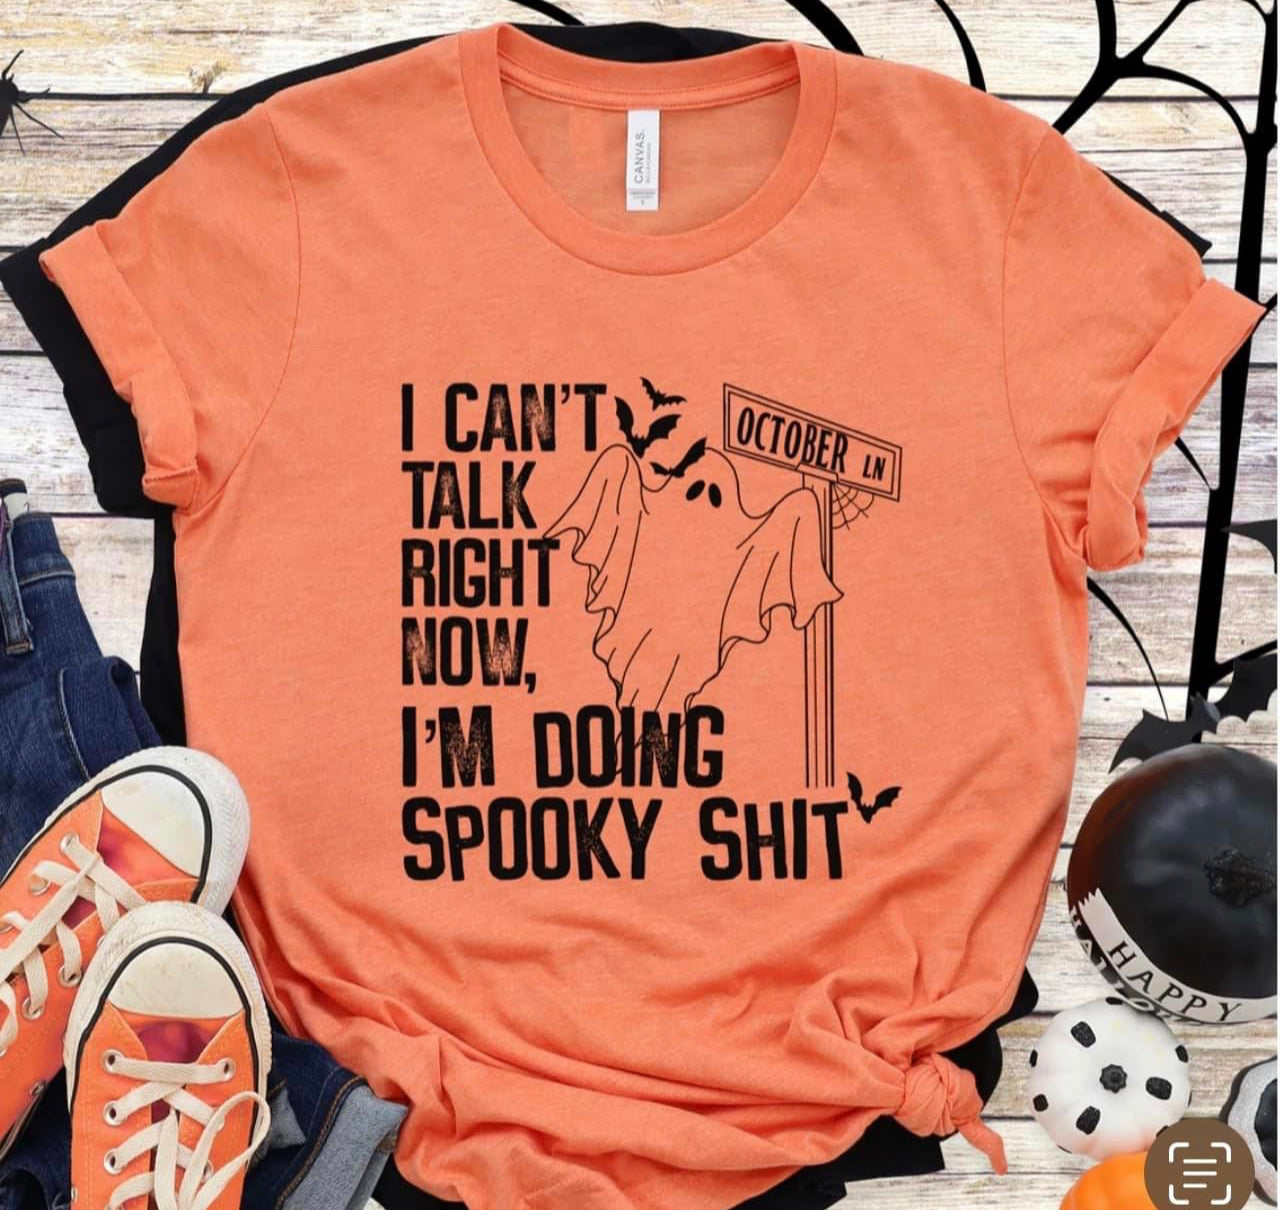 Doing Spooky Shit T Shirt